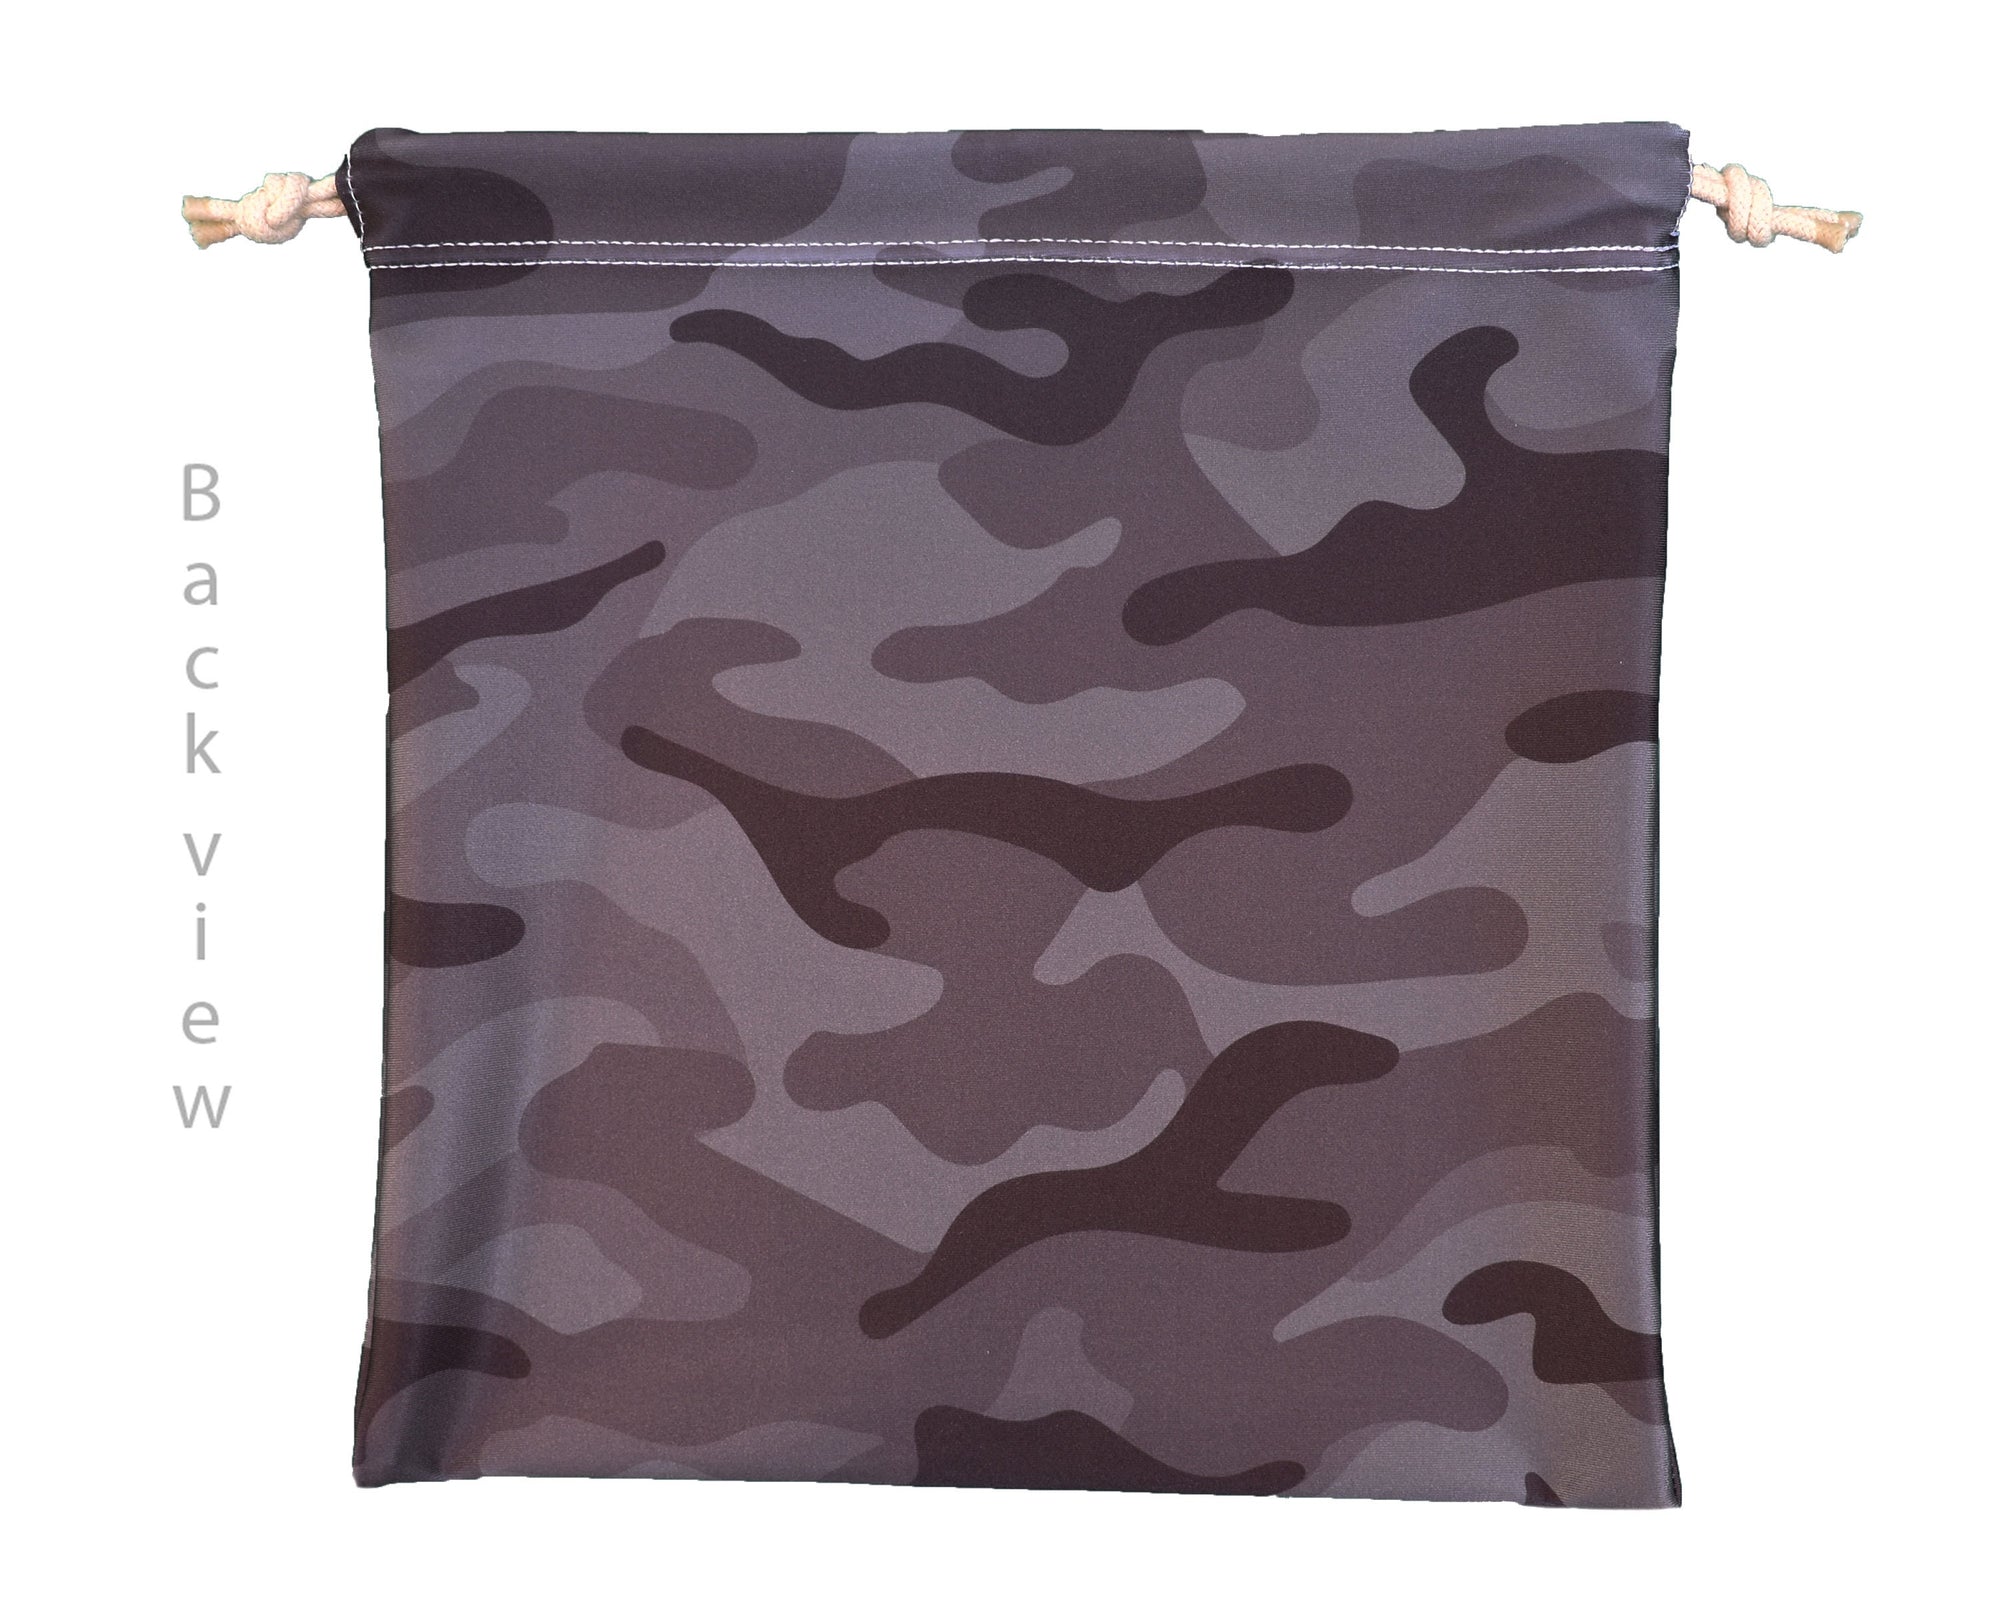 Gymnastics Grip Bag in Black Camouflage